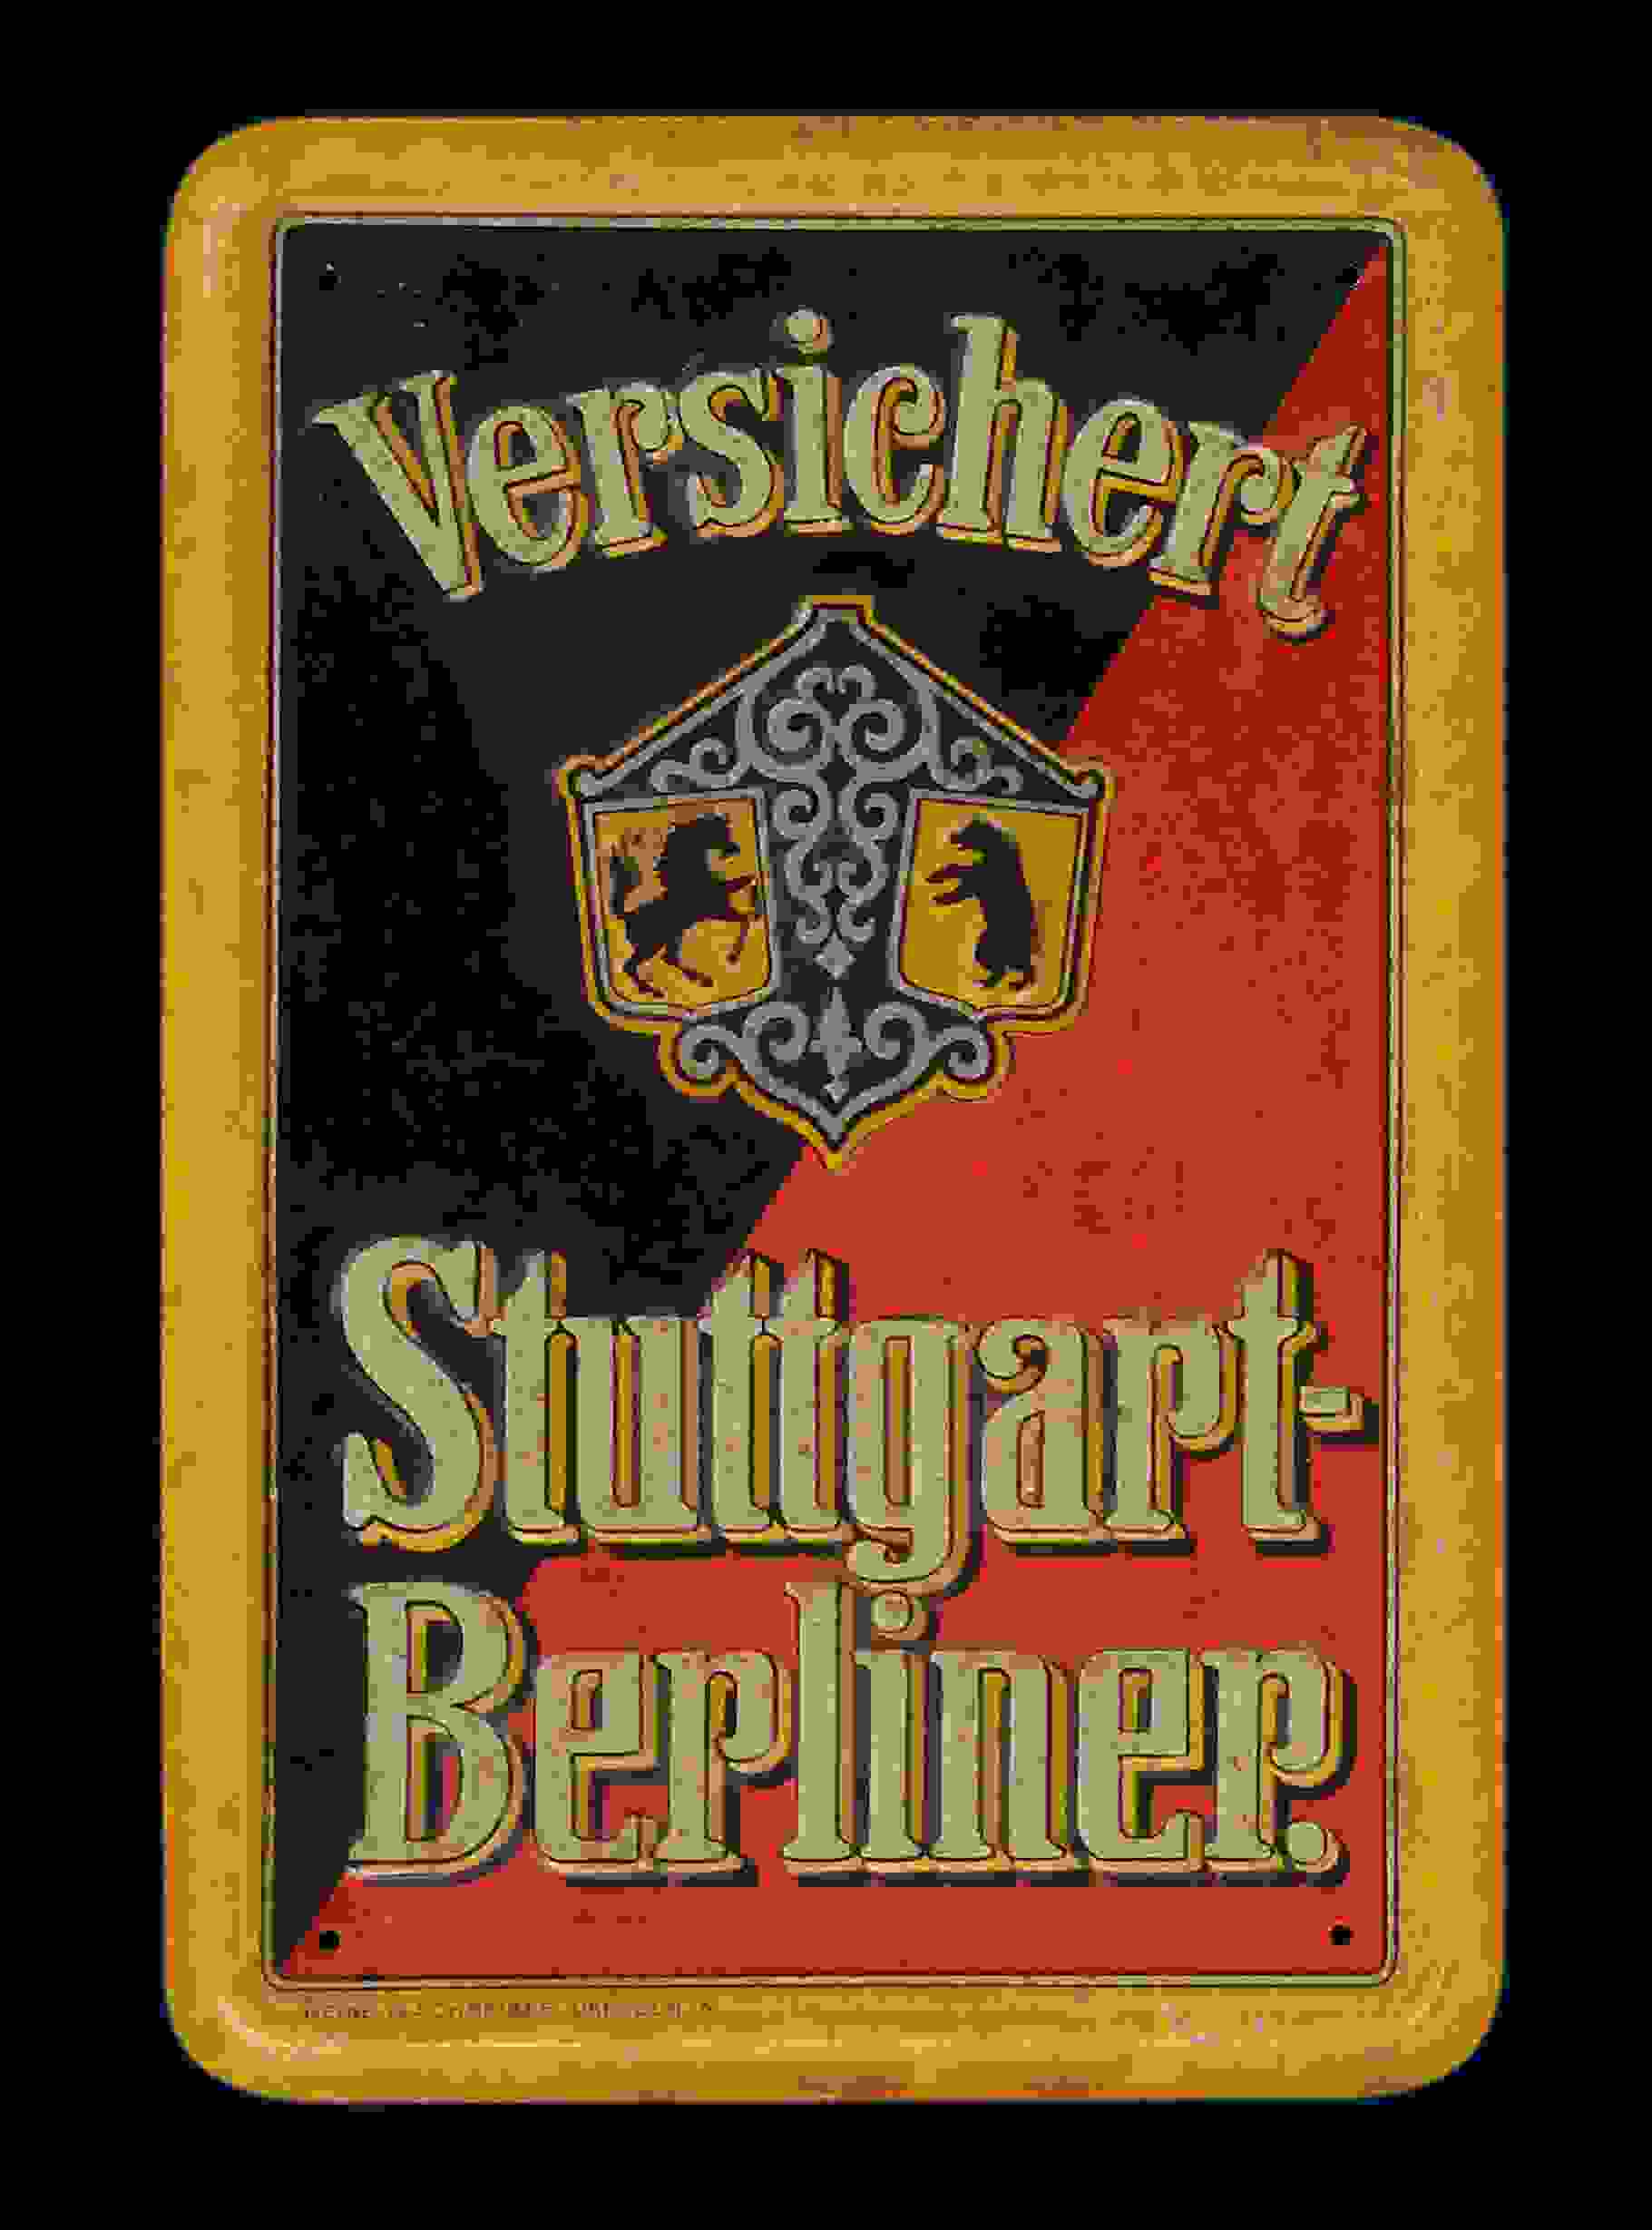 Stuttgart-Berliner Versichert 